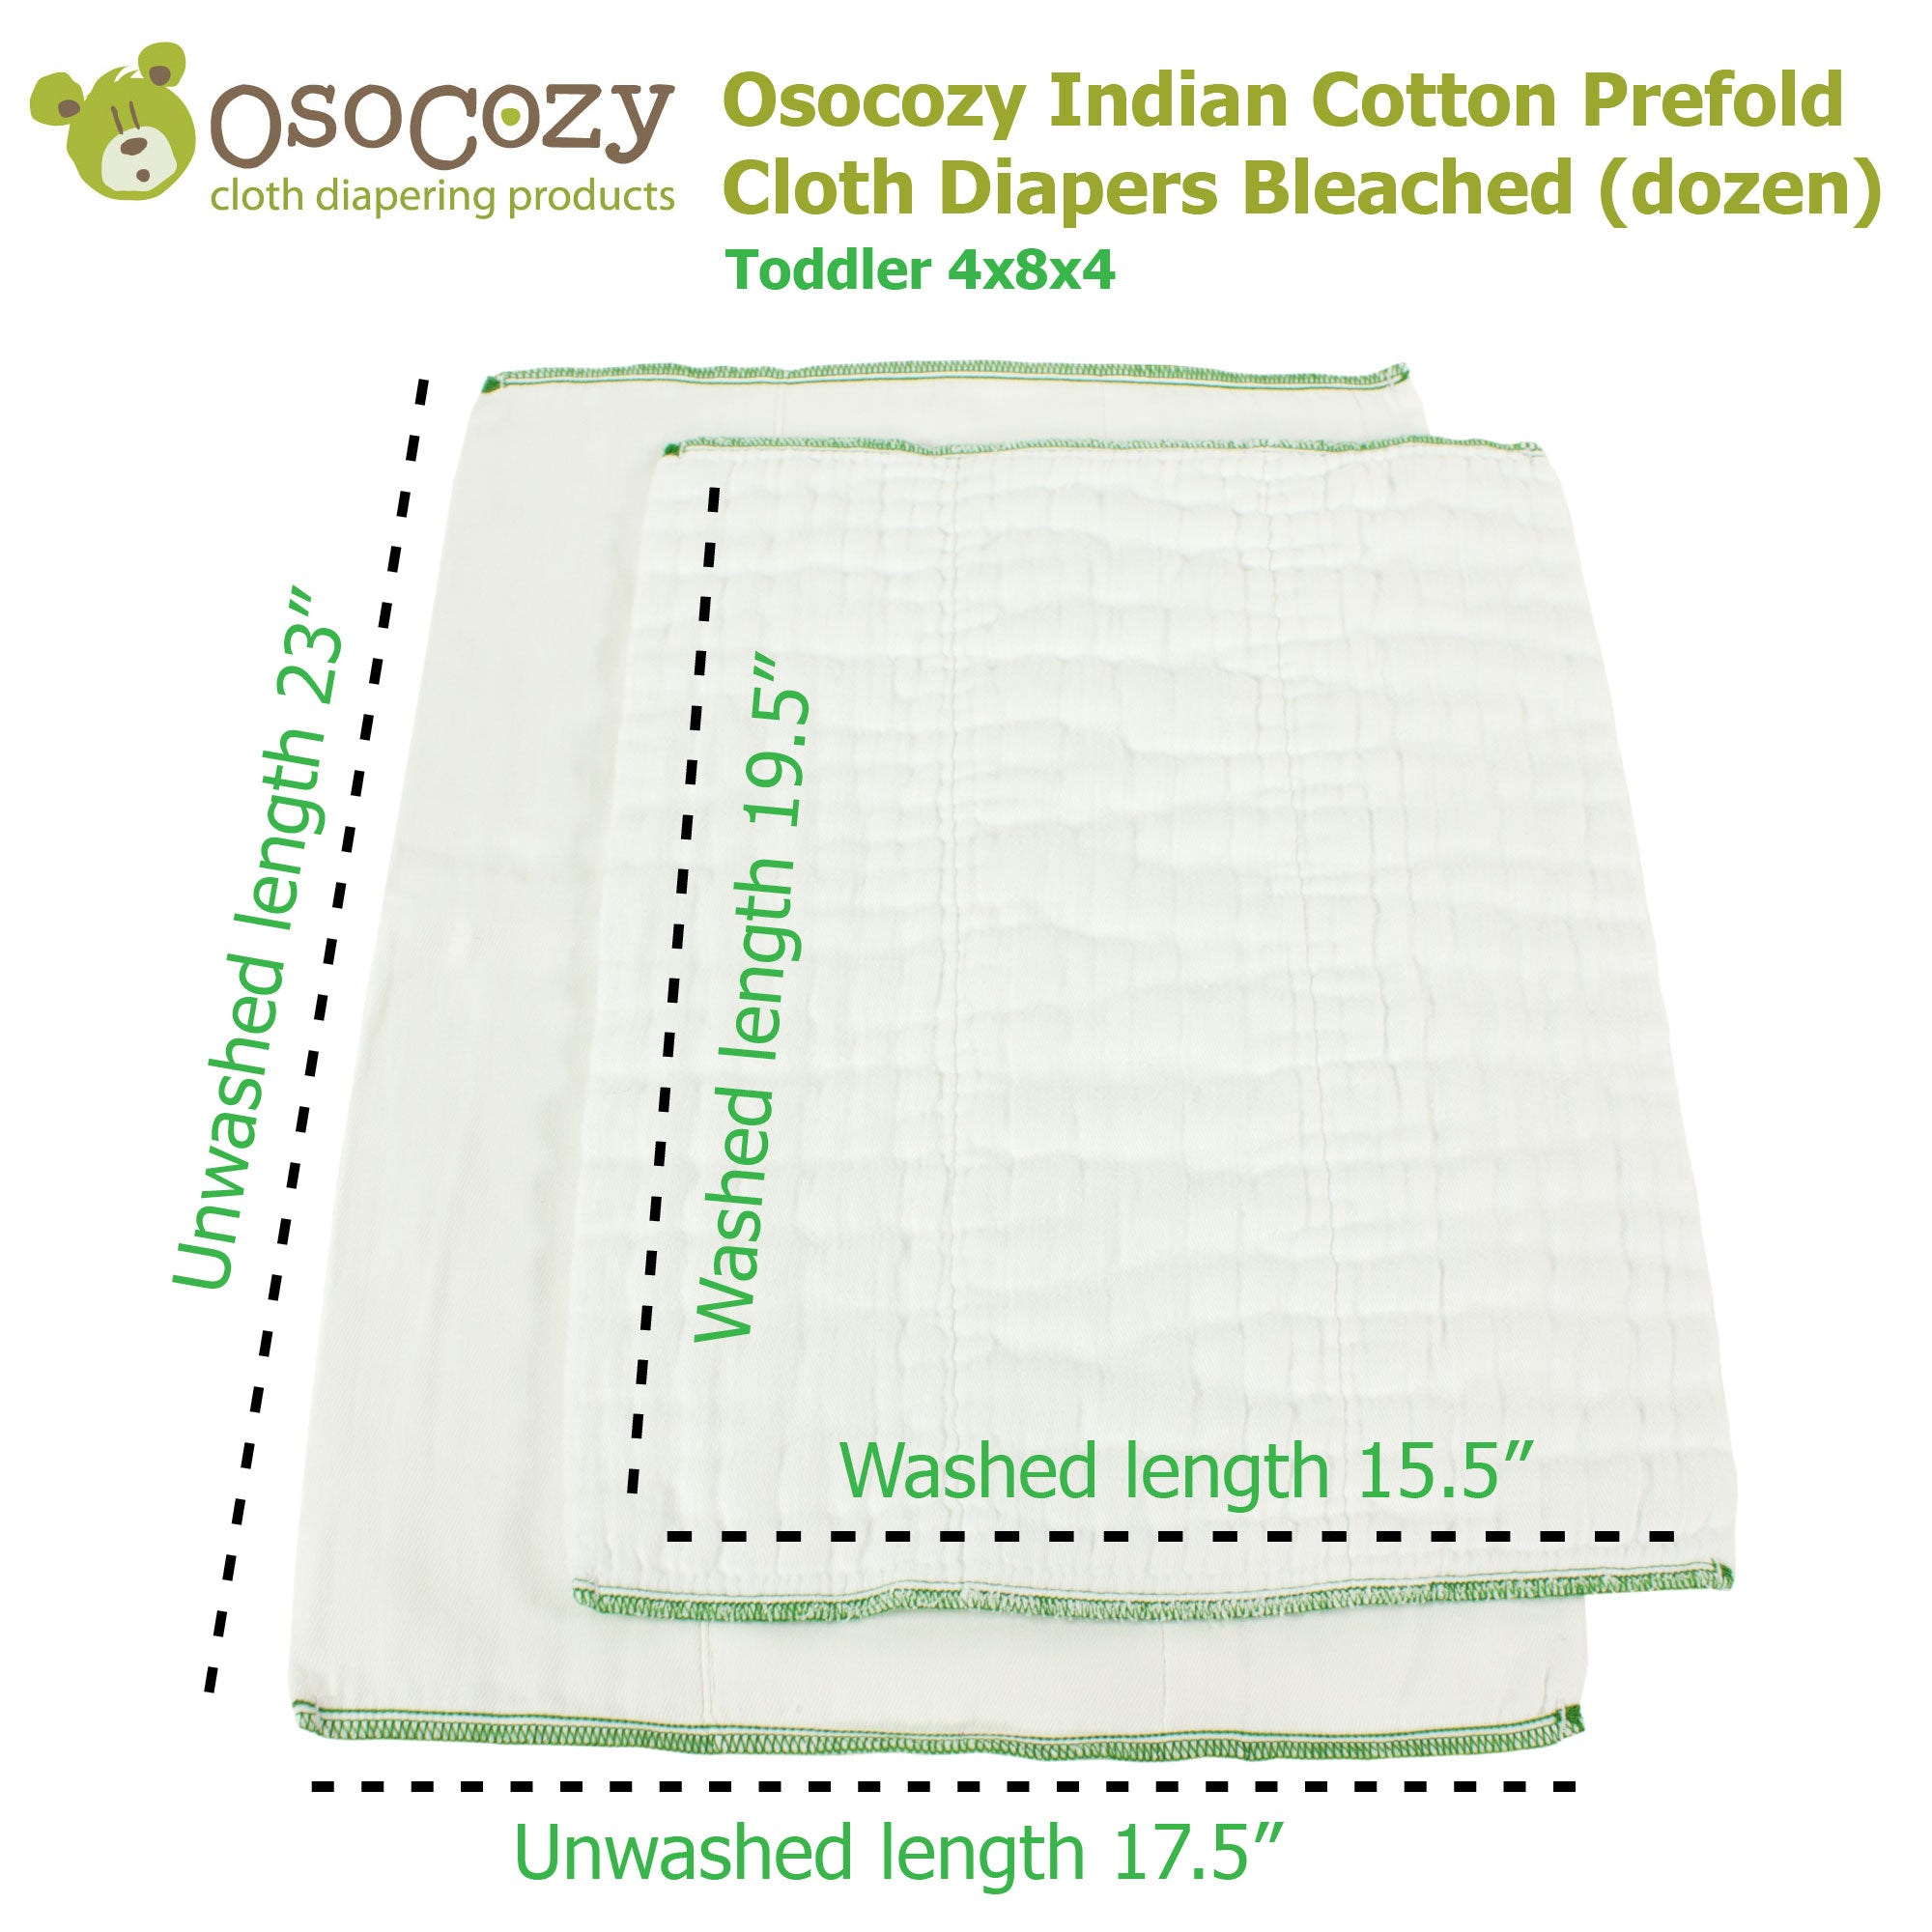 Osocozy Indian Cotton Prefold Cloth Diapers Bleached (dozen)